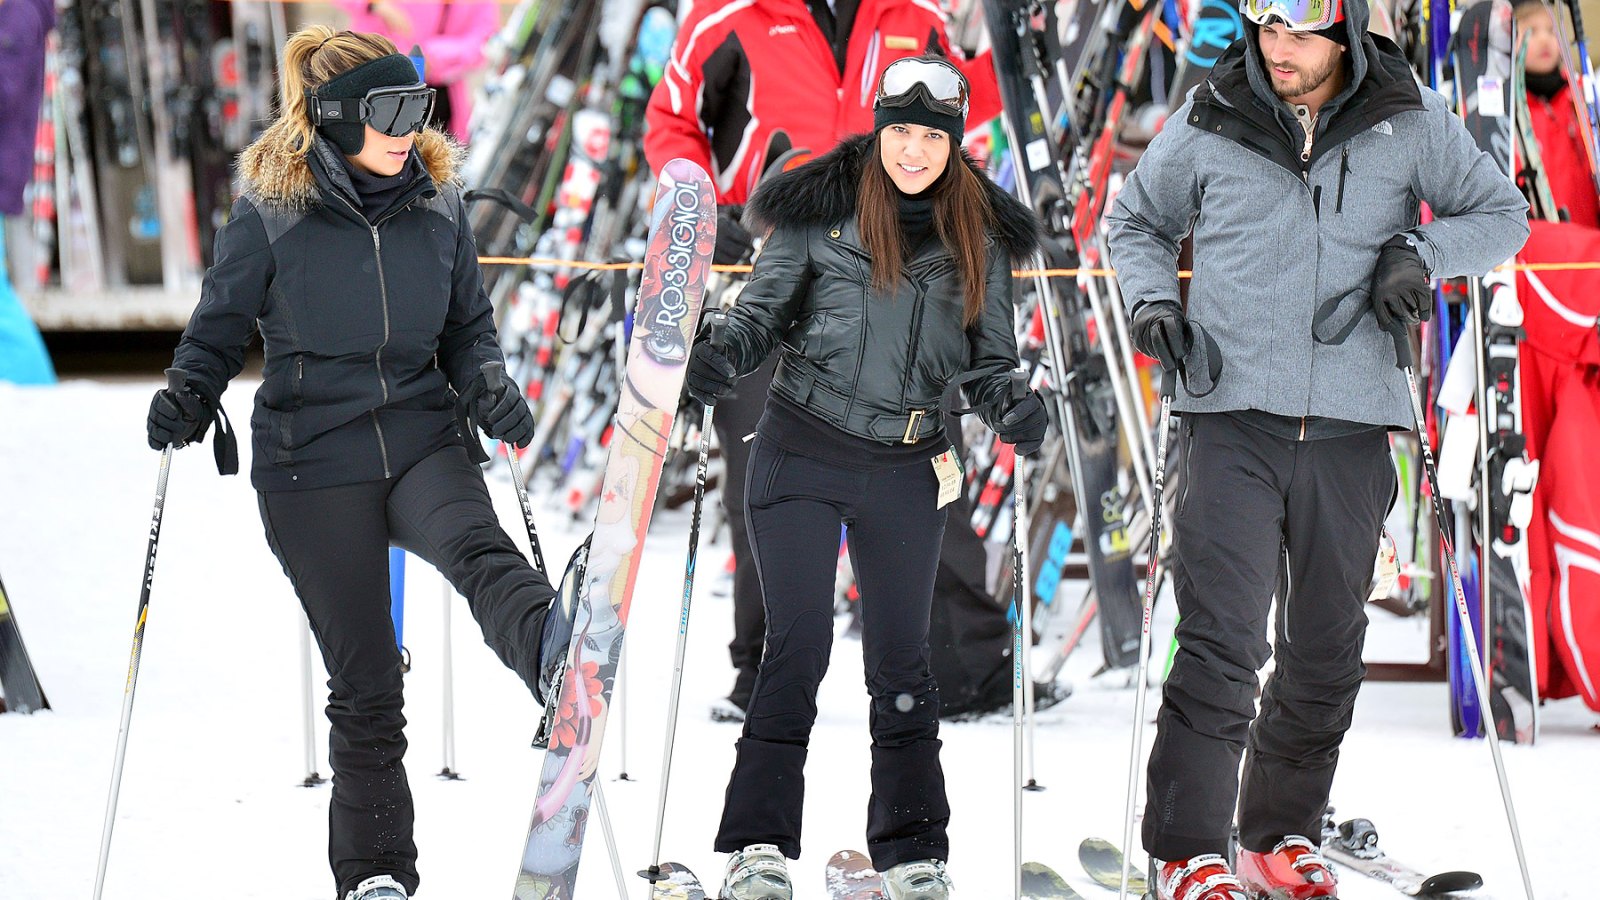 Kim Kardashian, Kourtney Kardashian, and Scott Disick go skiing